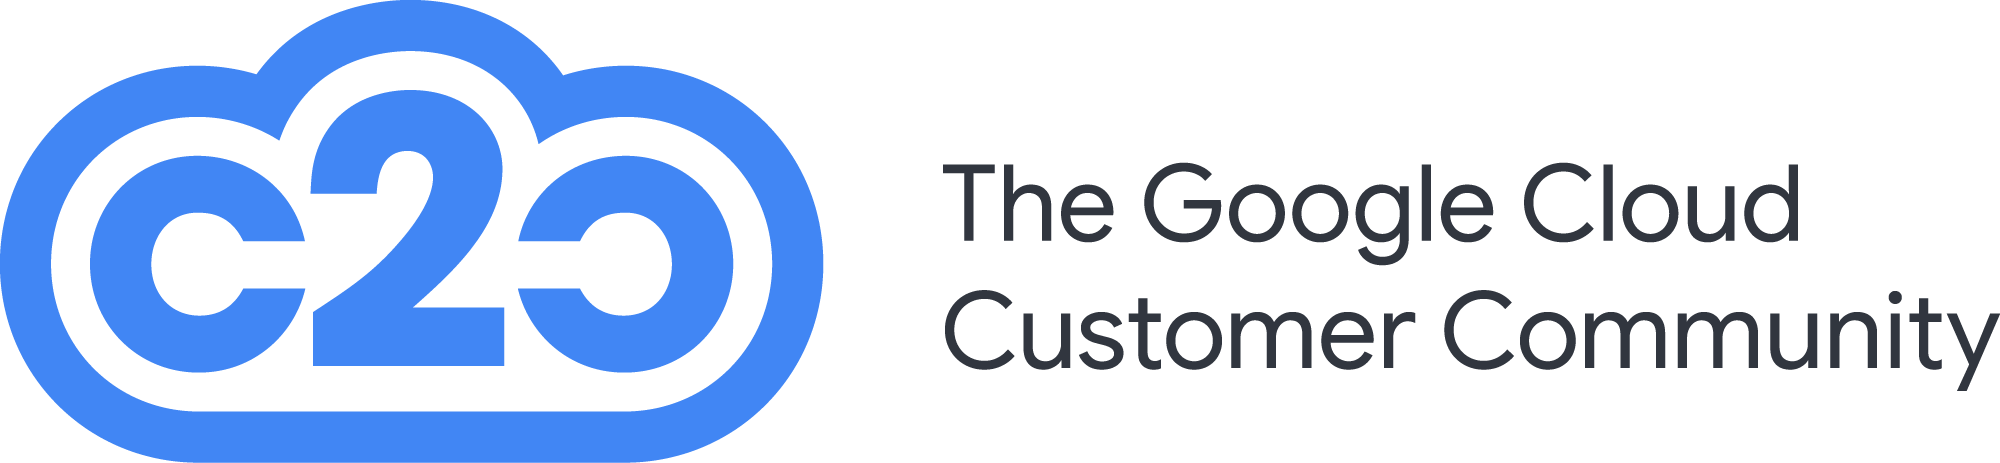 C2C Global | The Google Cloud Customer Community